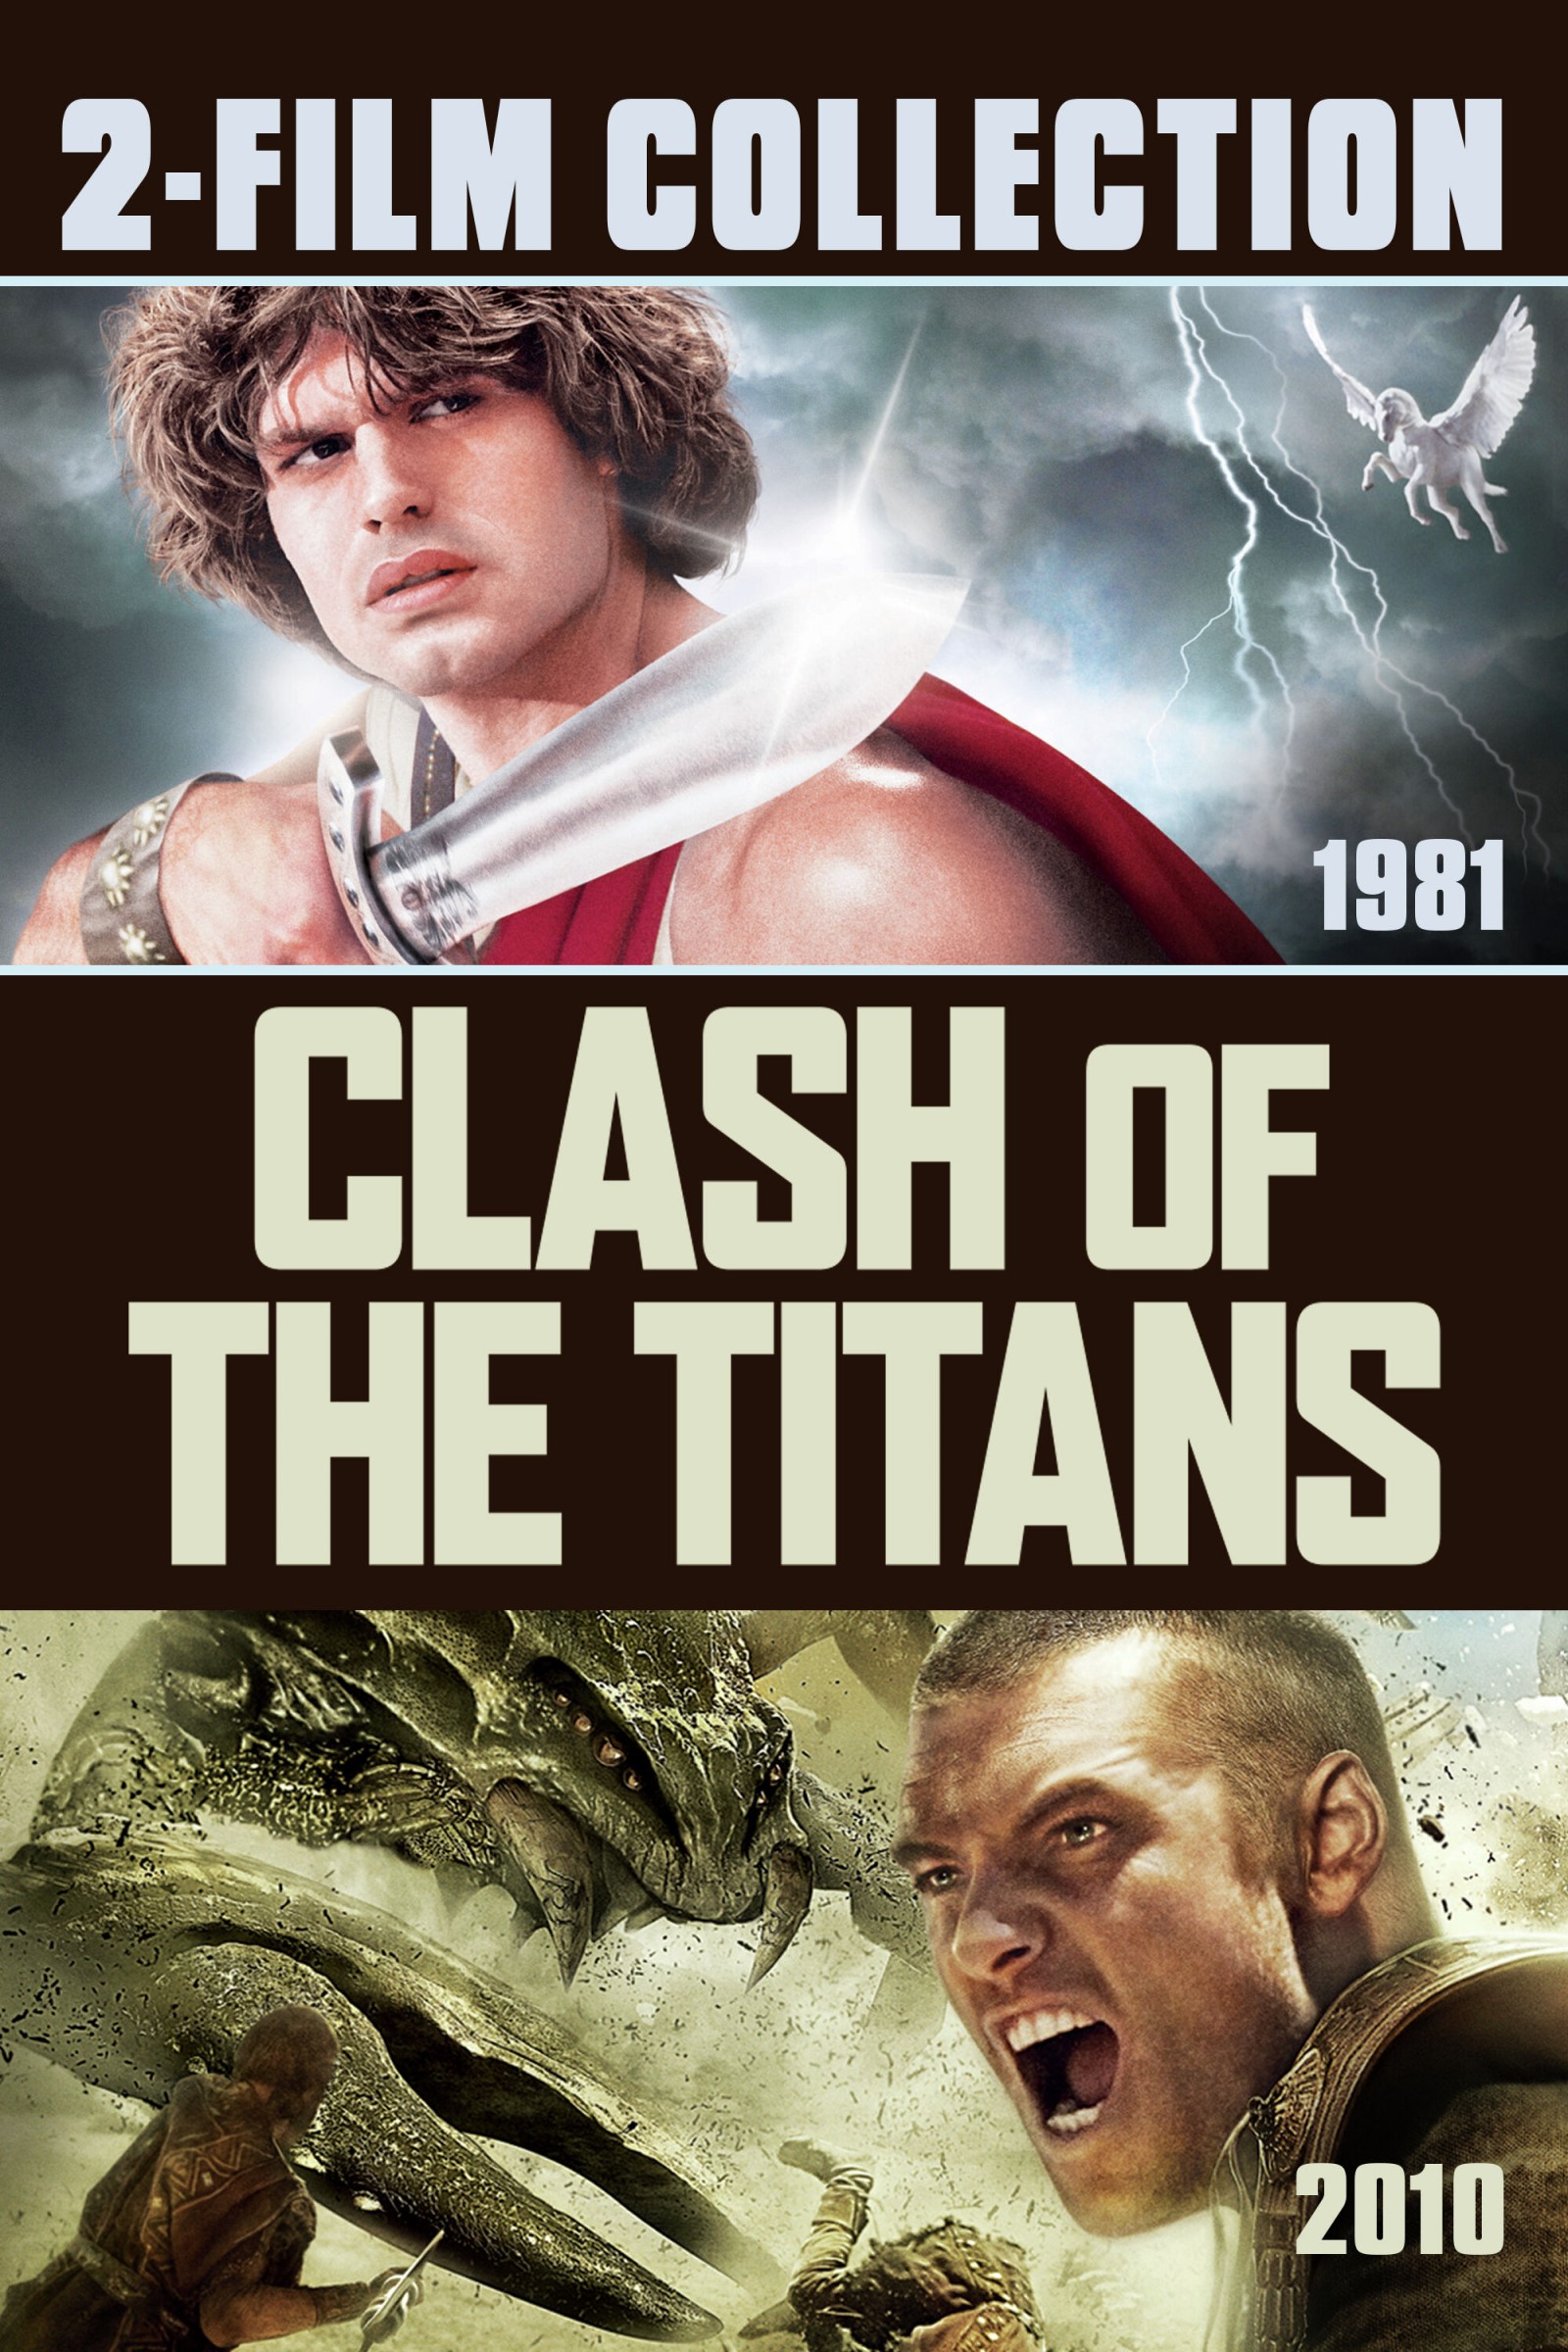 Titans Double Feature (Clash of the Titans / Wrath of the Titans 2